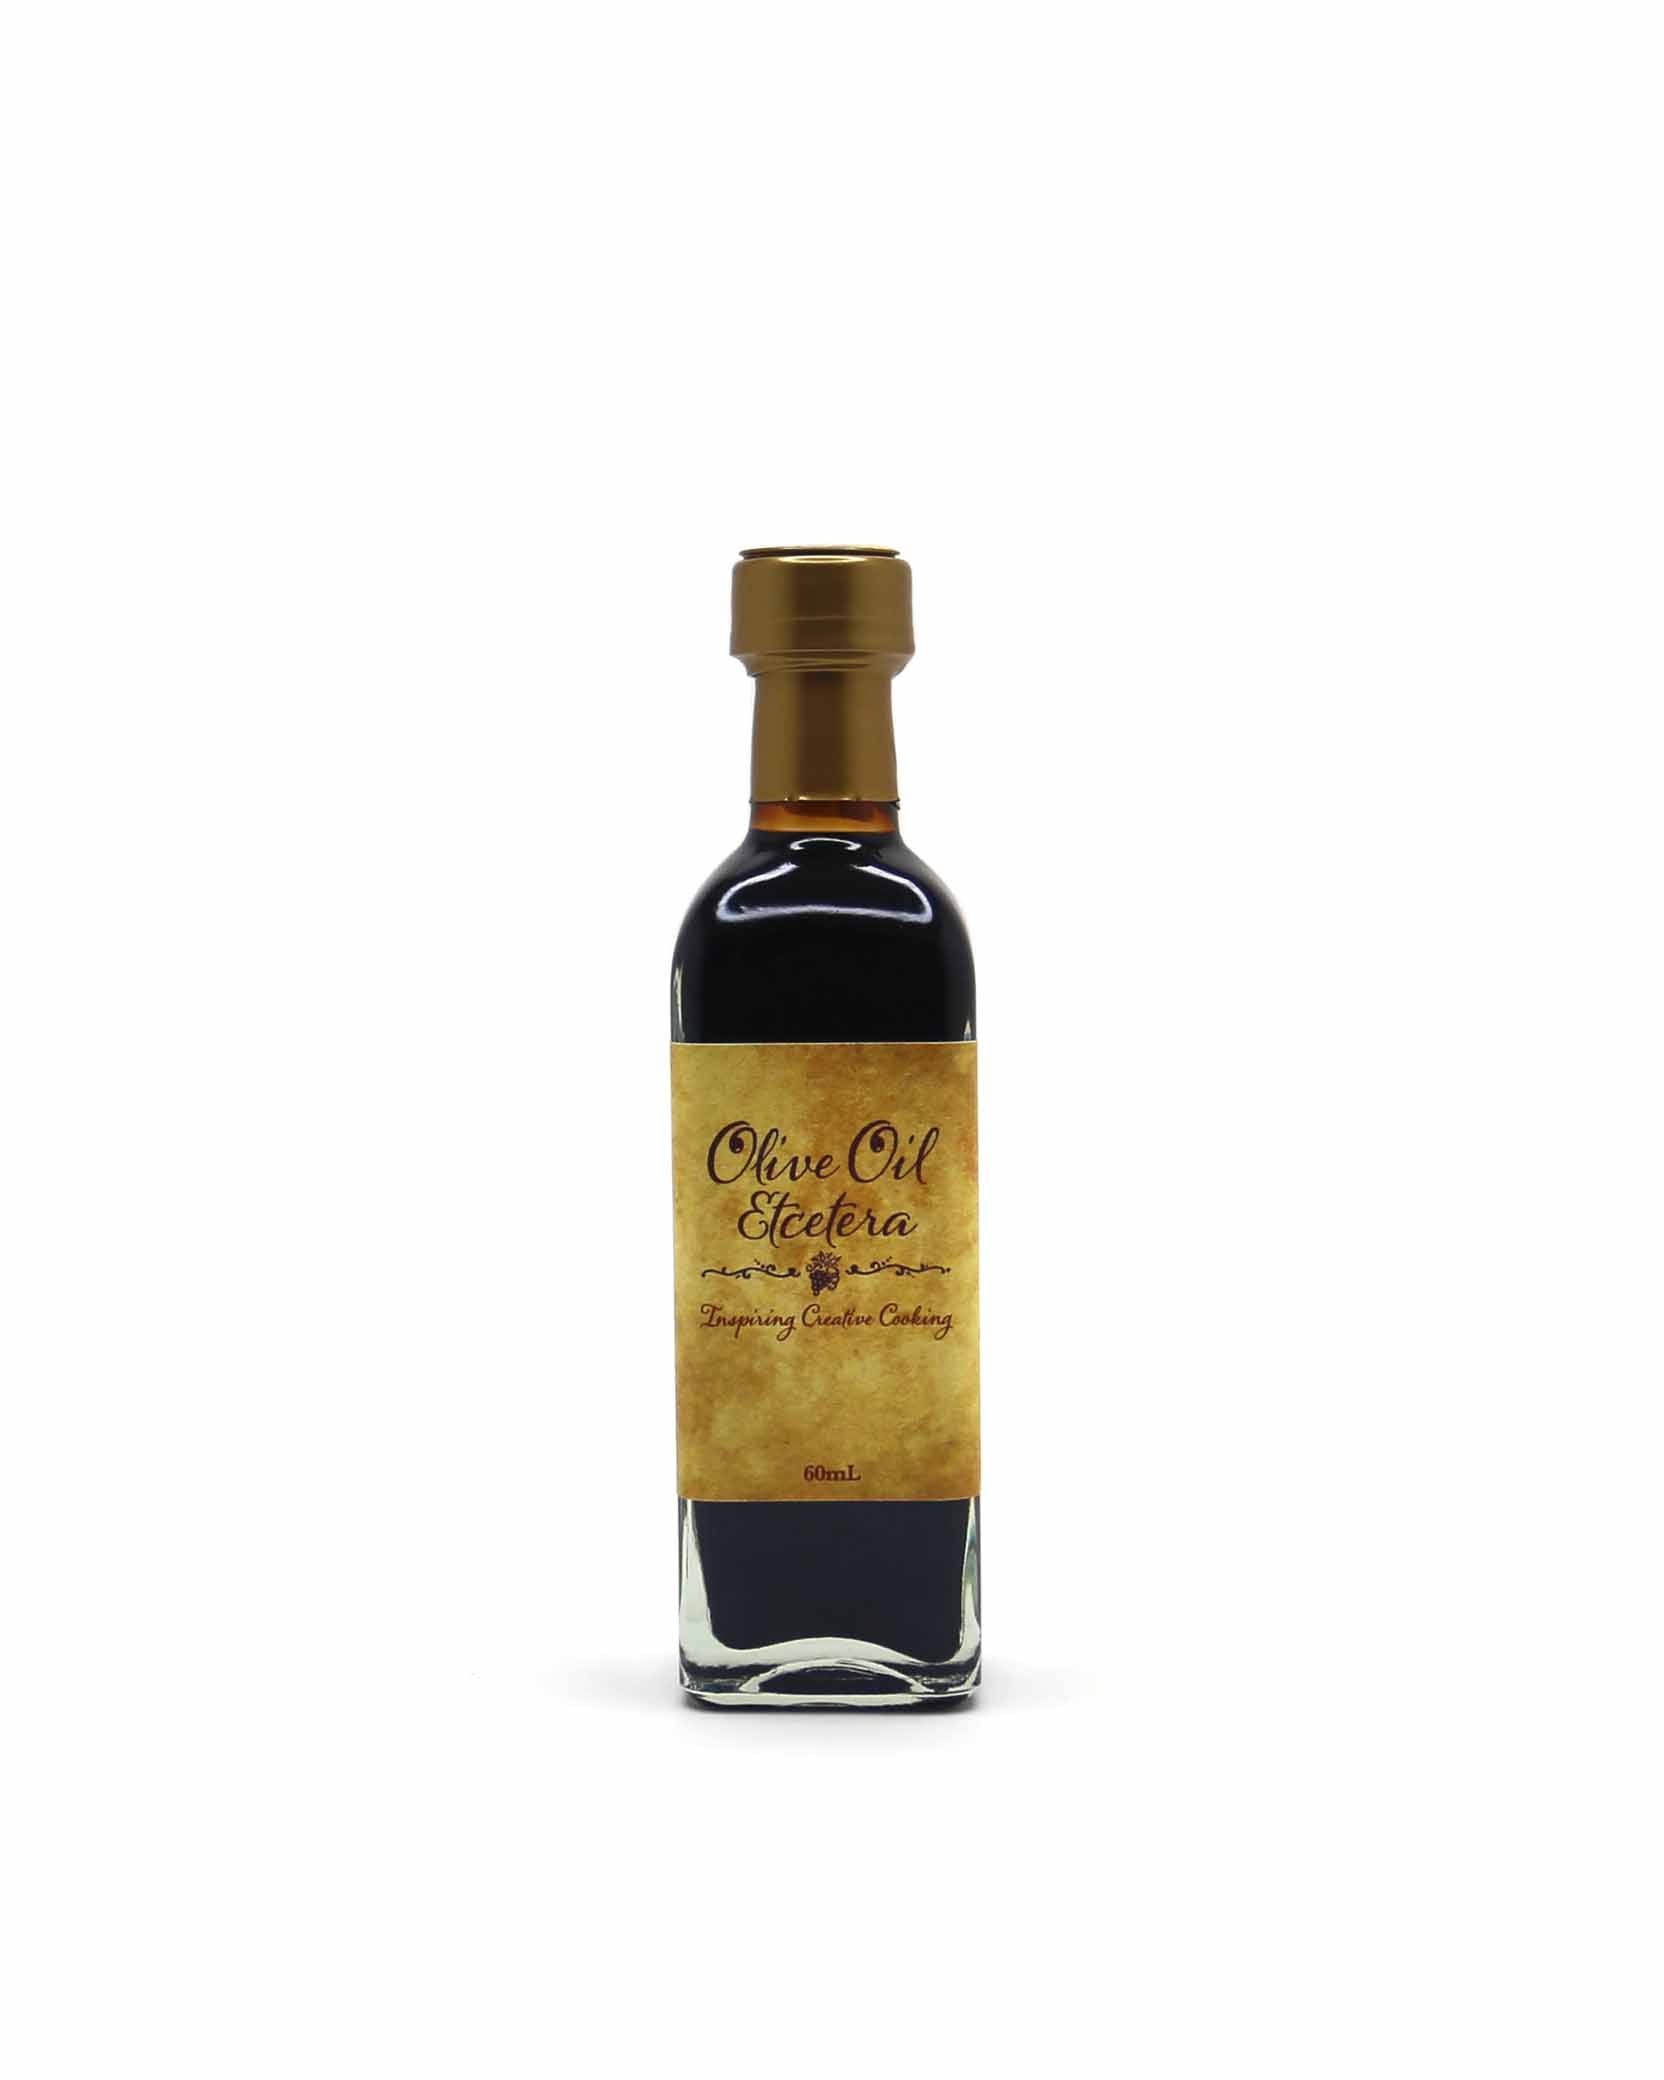 Fig Balsamic Vinegar - Olive Oil Etcetera - Bucks county's gourmet olive oil and vinegar shop